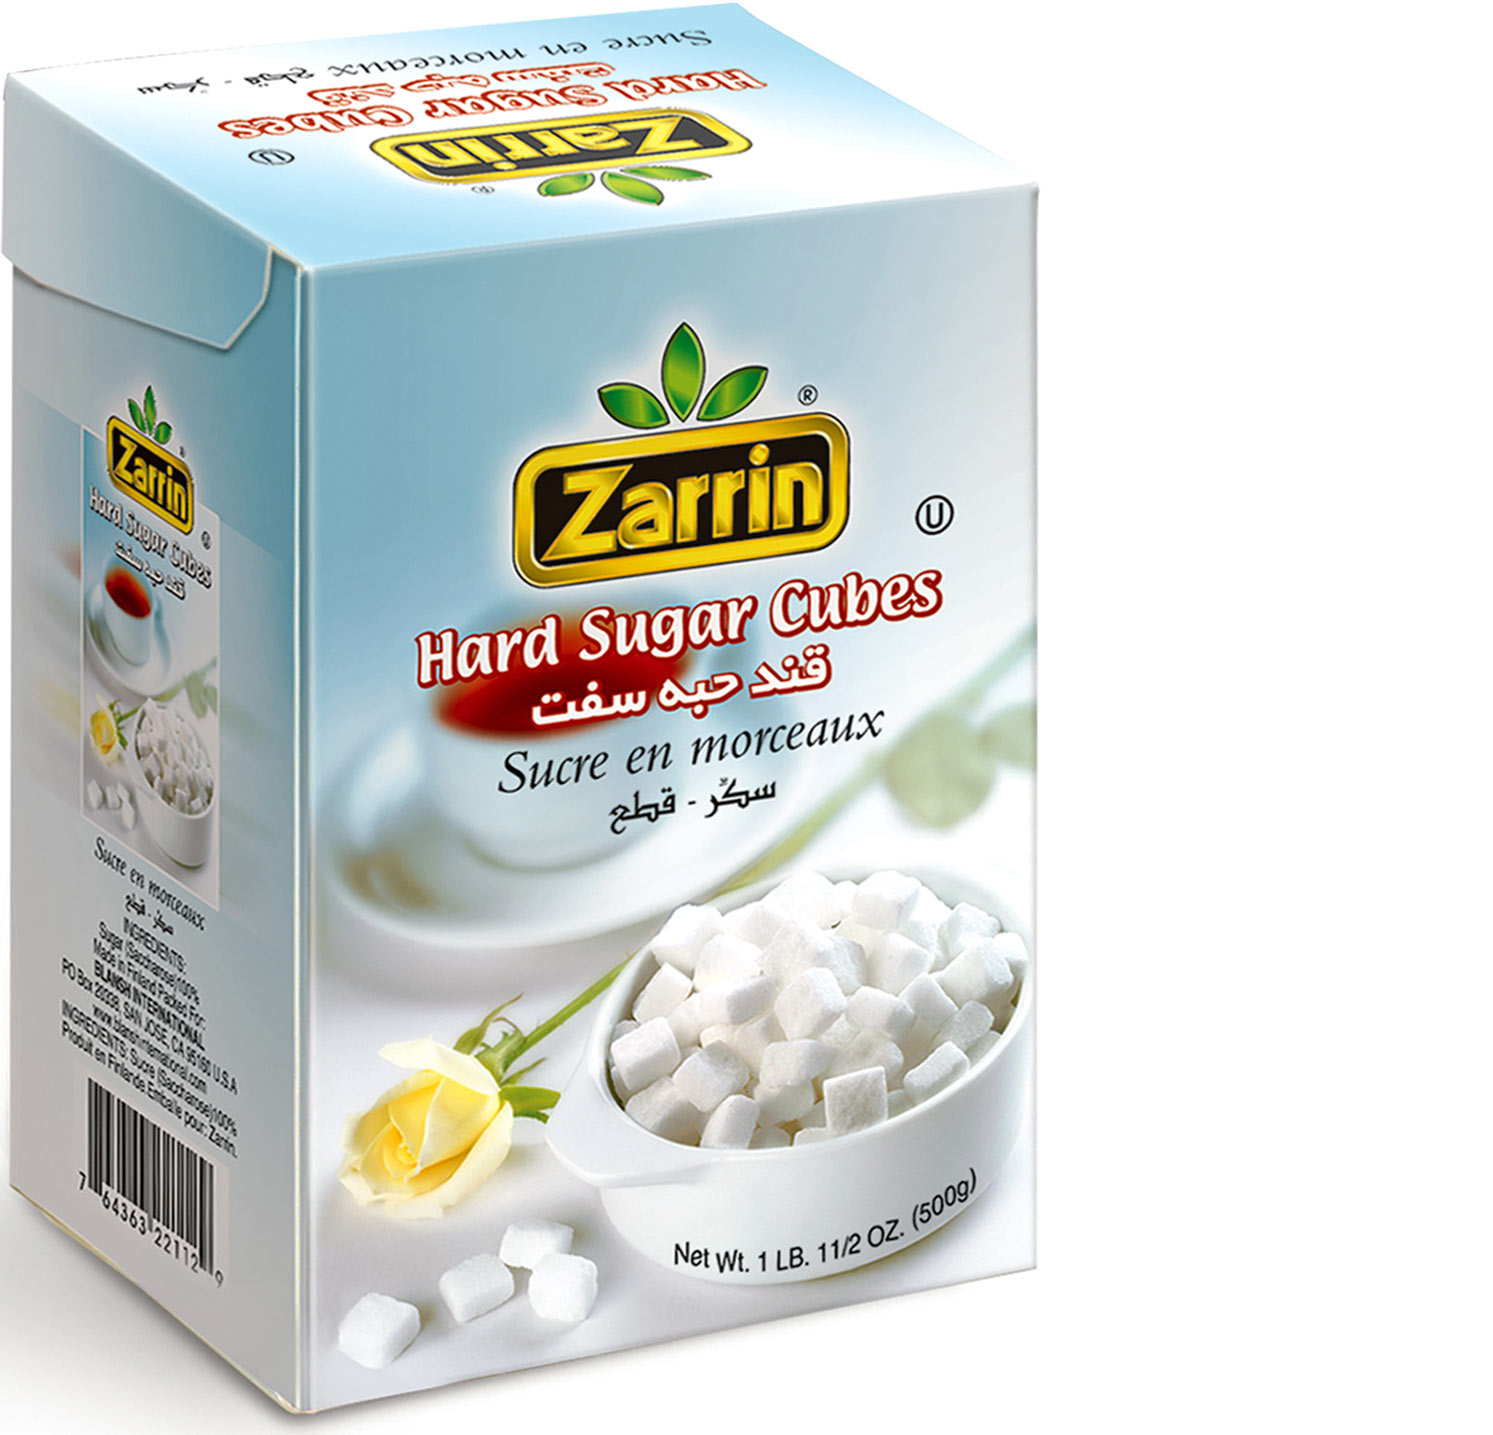 Zarrin hard sugar cubes packet with 17.85 oz.